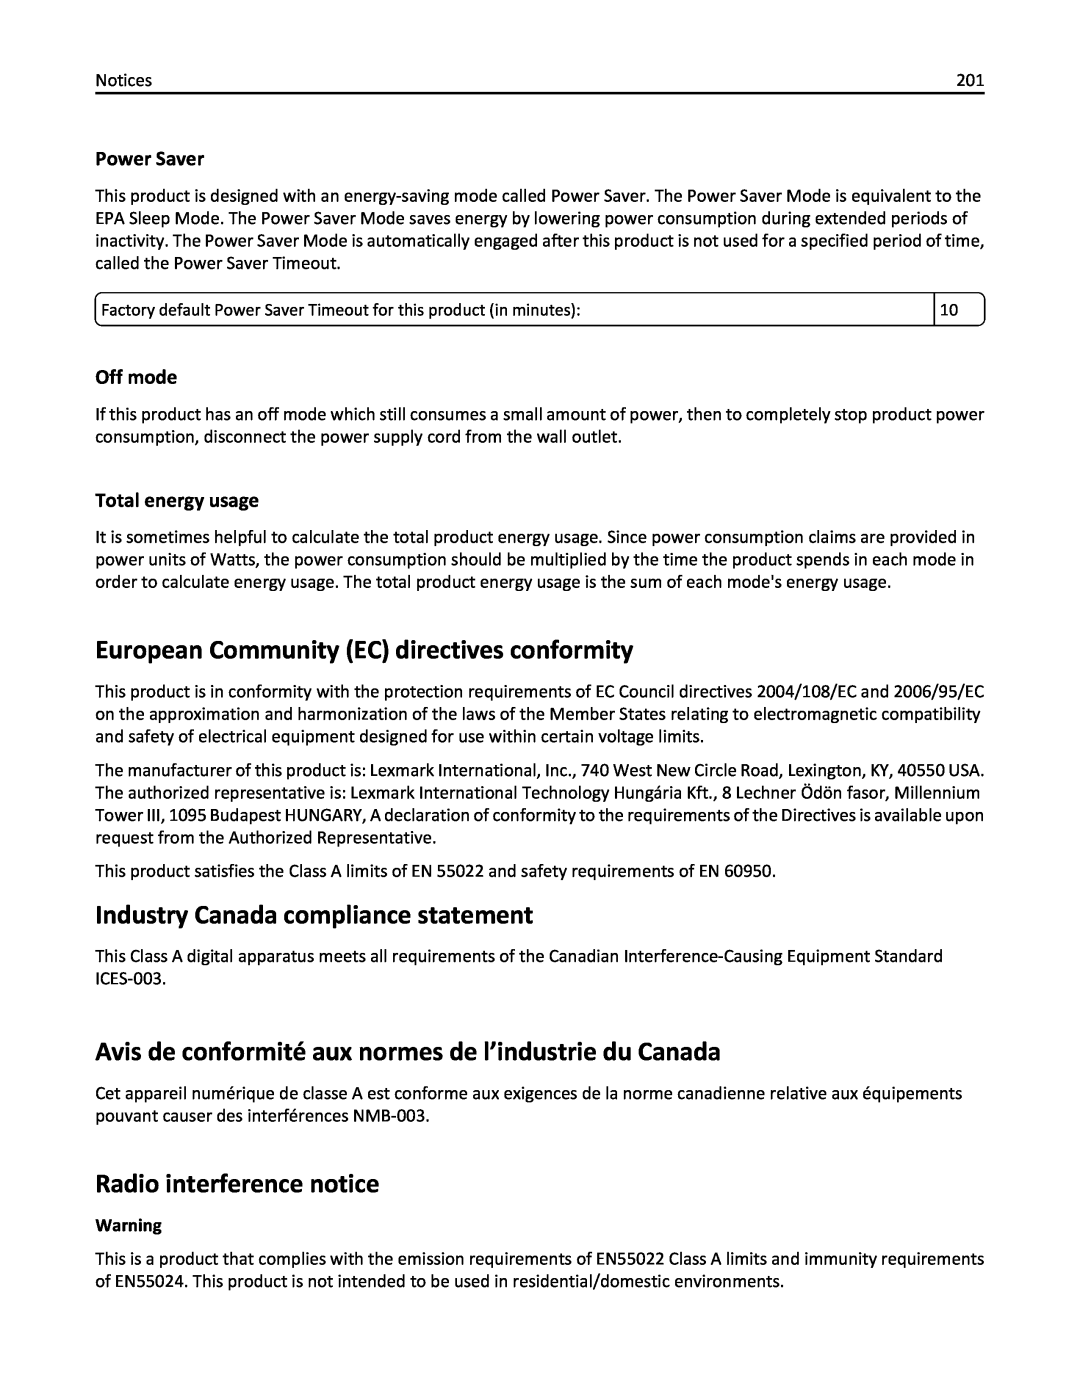 Lexmark 110 European Community EC directives conformity, Industry Canada compliance statement, Radio interference notice 